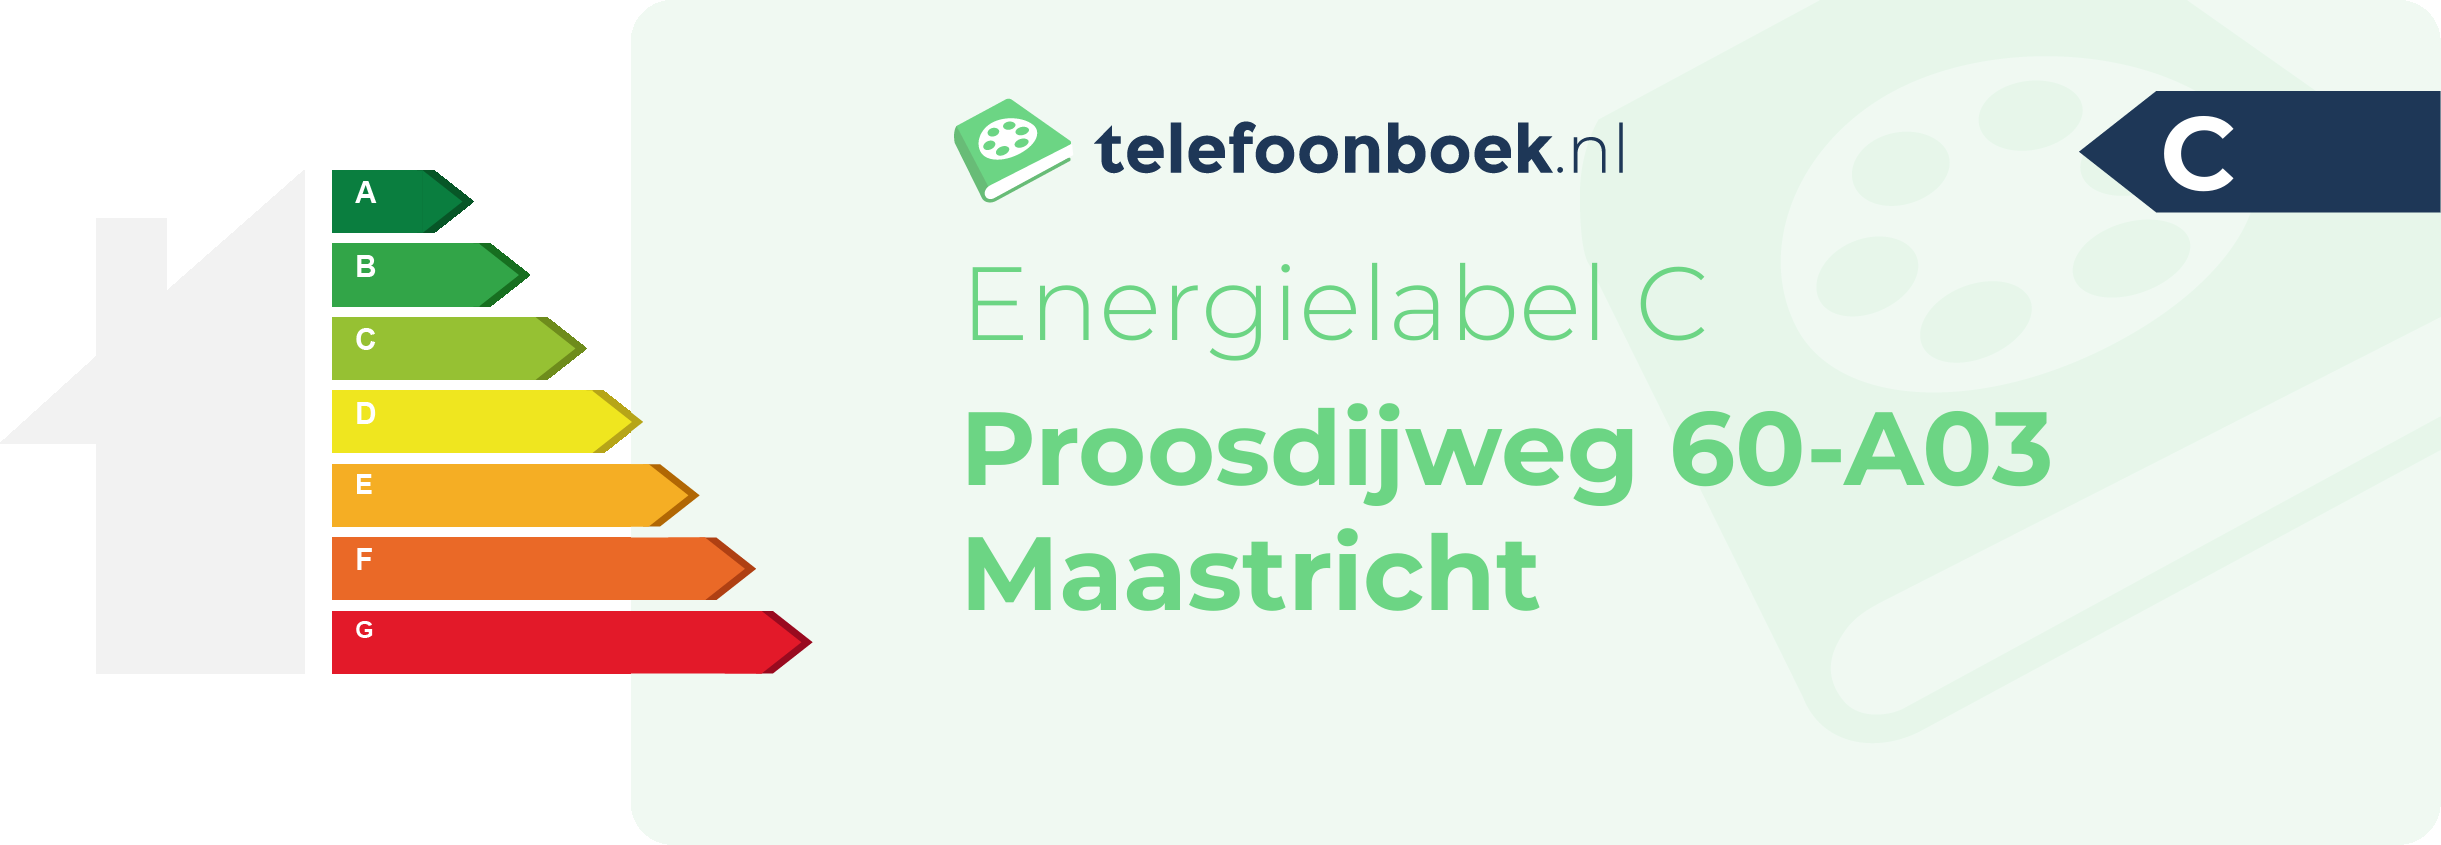 Energielabel Proosdijweg 60-A03 Maastricht